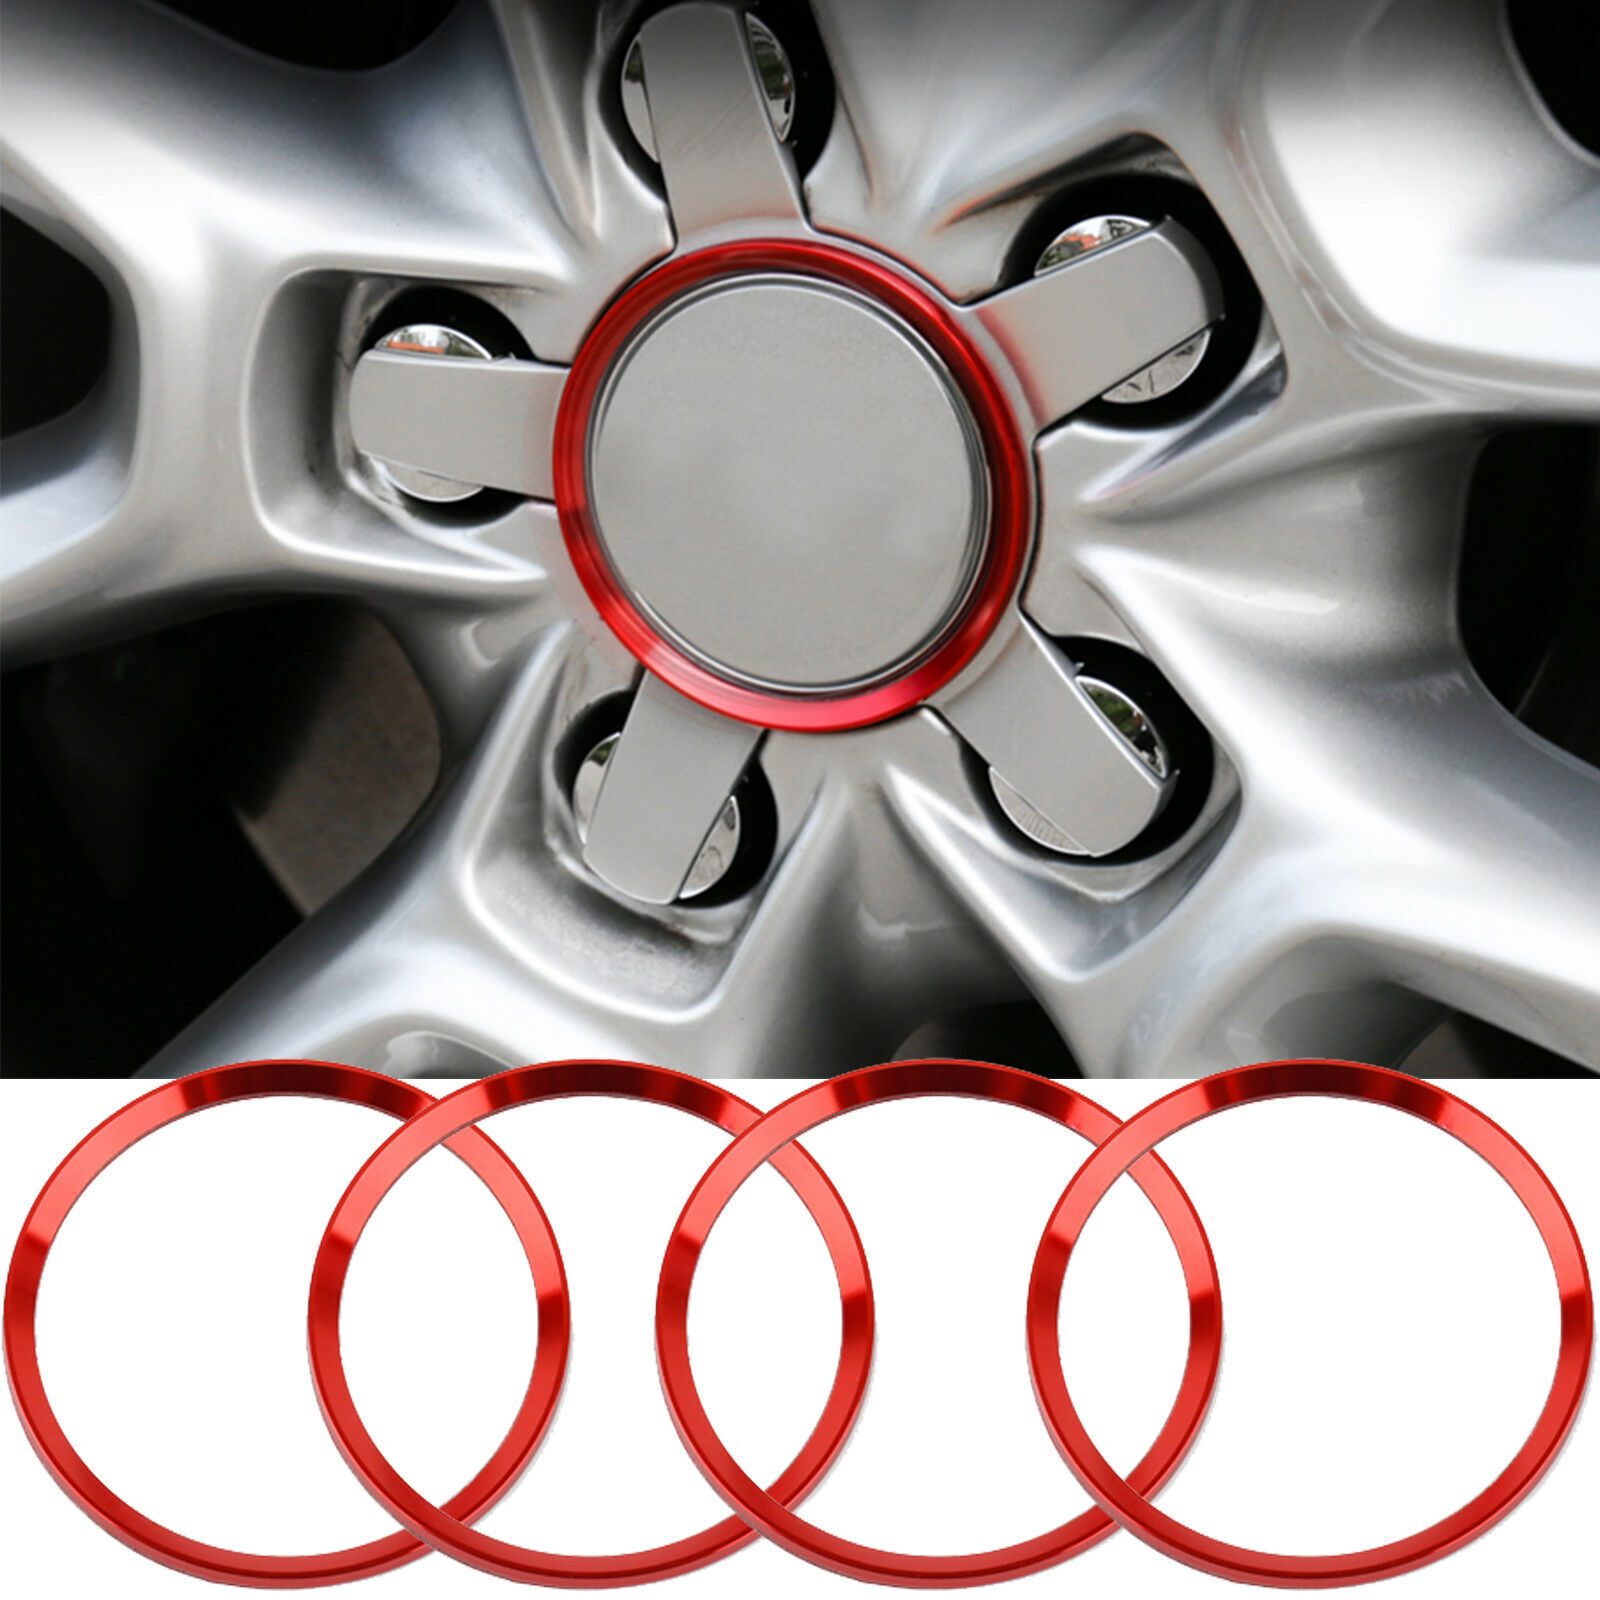 Aluminum Alloy Red Car Wheel Rim Center Cap Hub Rings Cover For Audi A3 A4 TT Q5